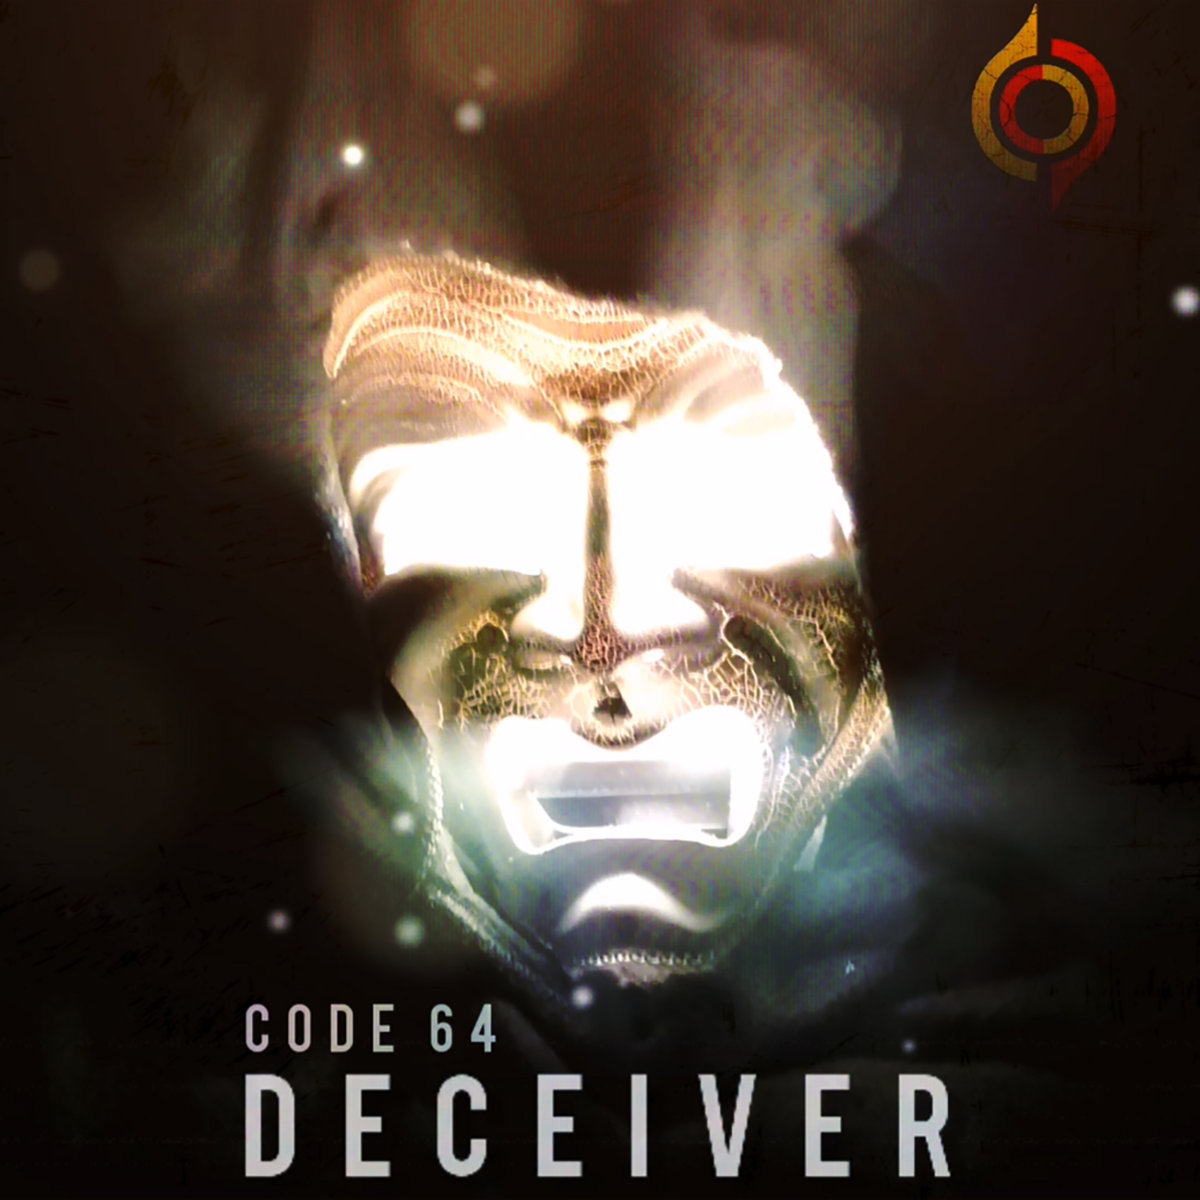 Code64 - Deceiver - Code64 - Deceiver